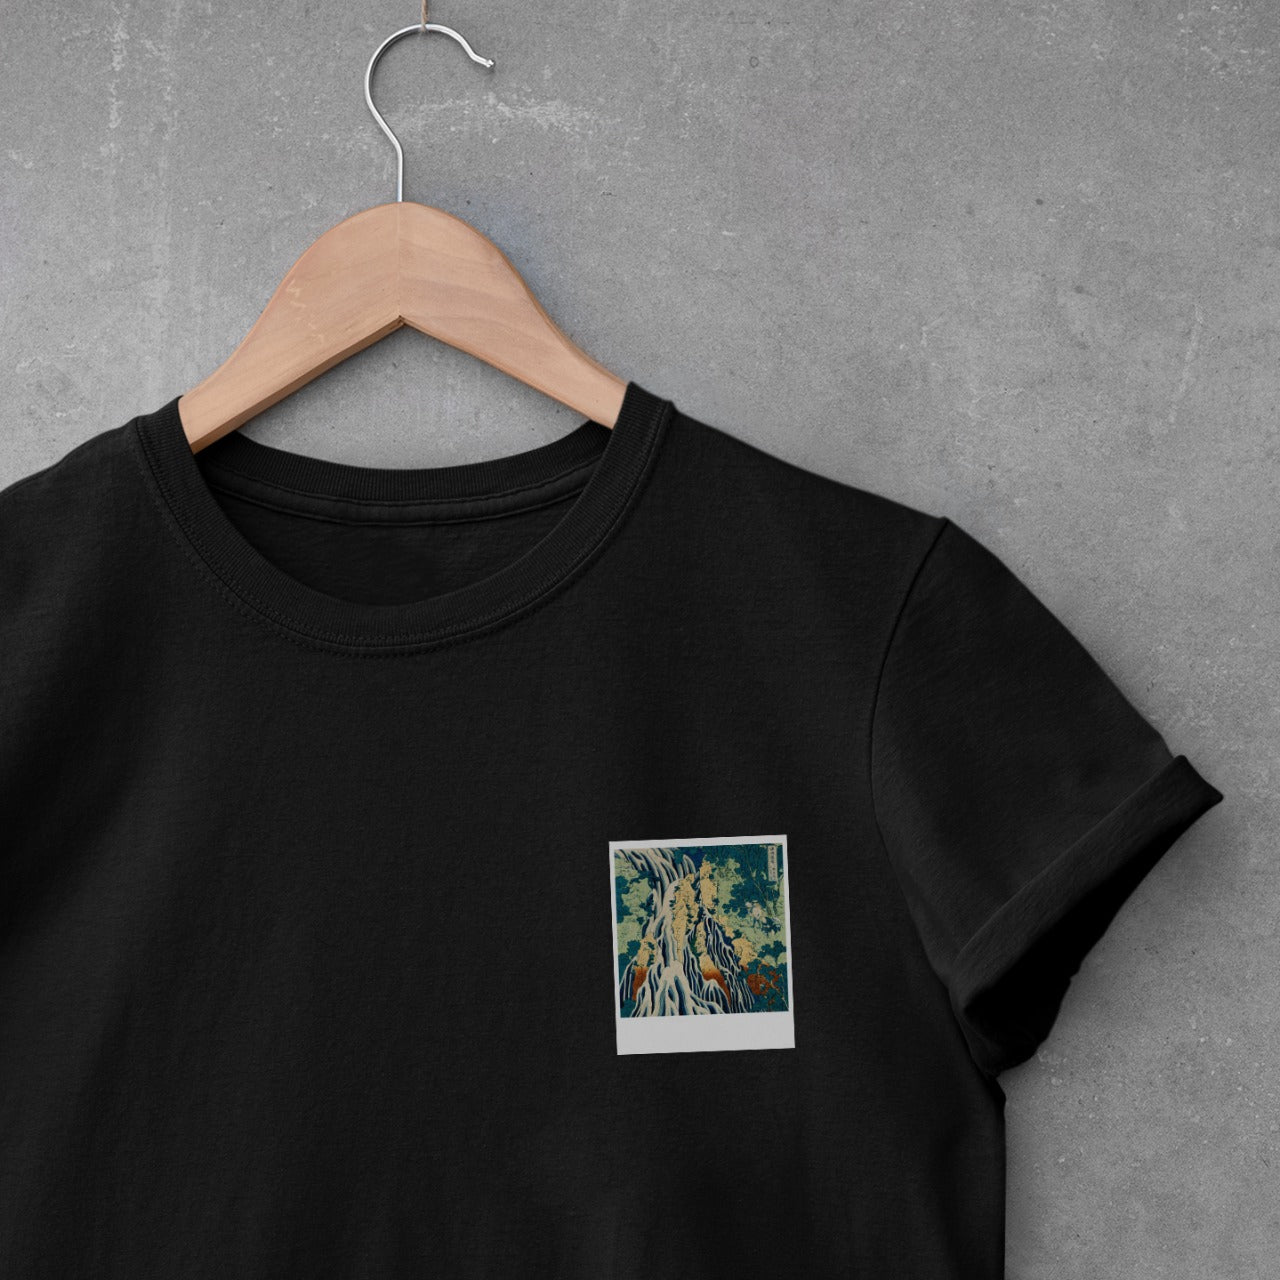 Polaroid of painting of Japanese waterfall art on black hanging t-shirt.